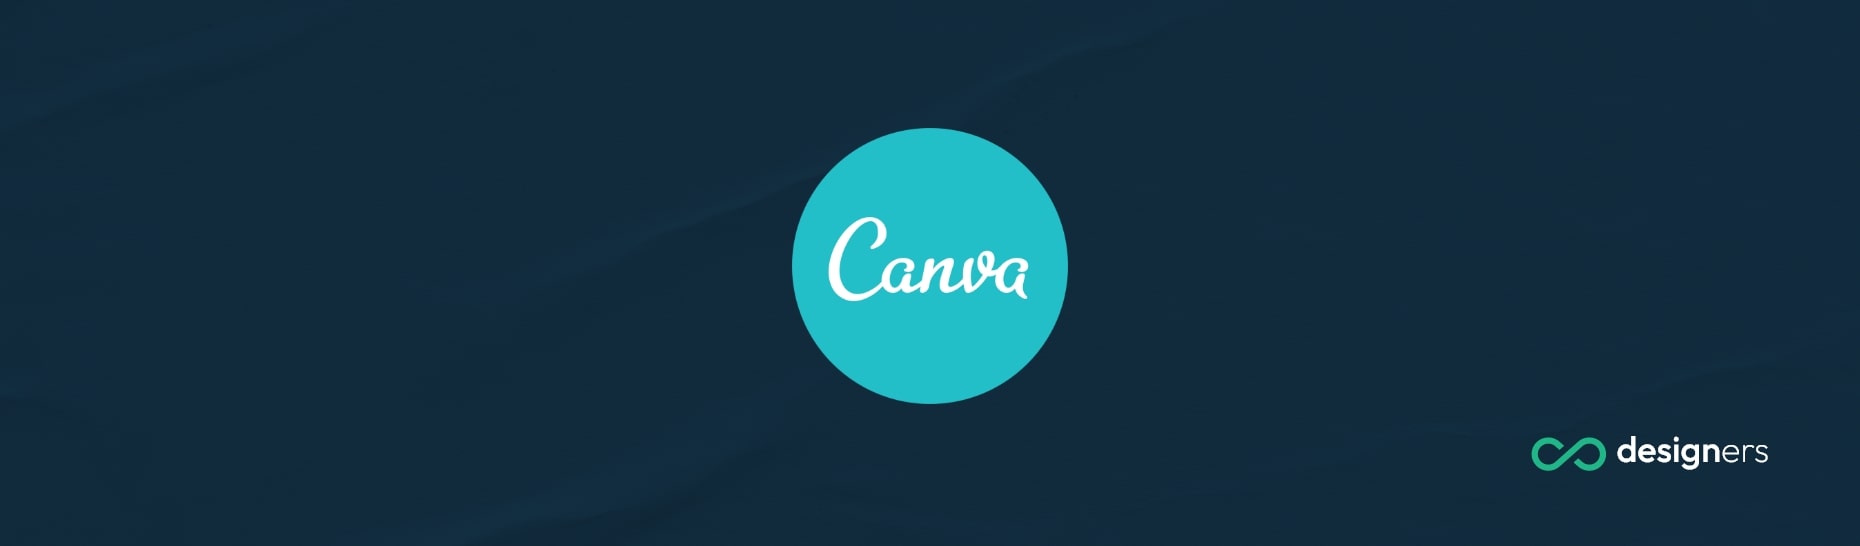 Is Canva a Vector Program?